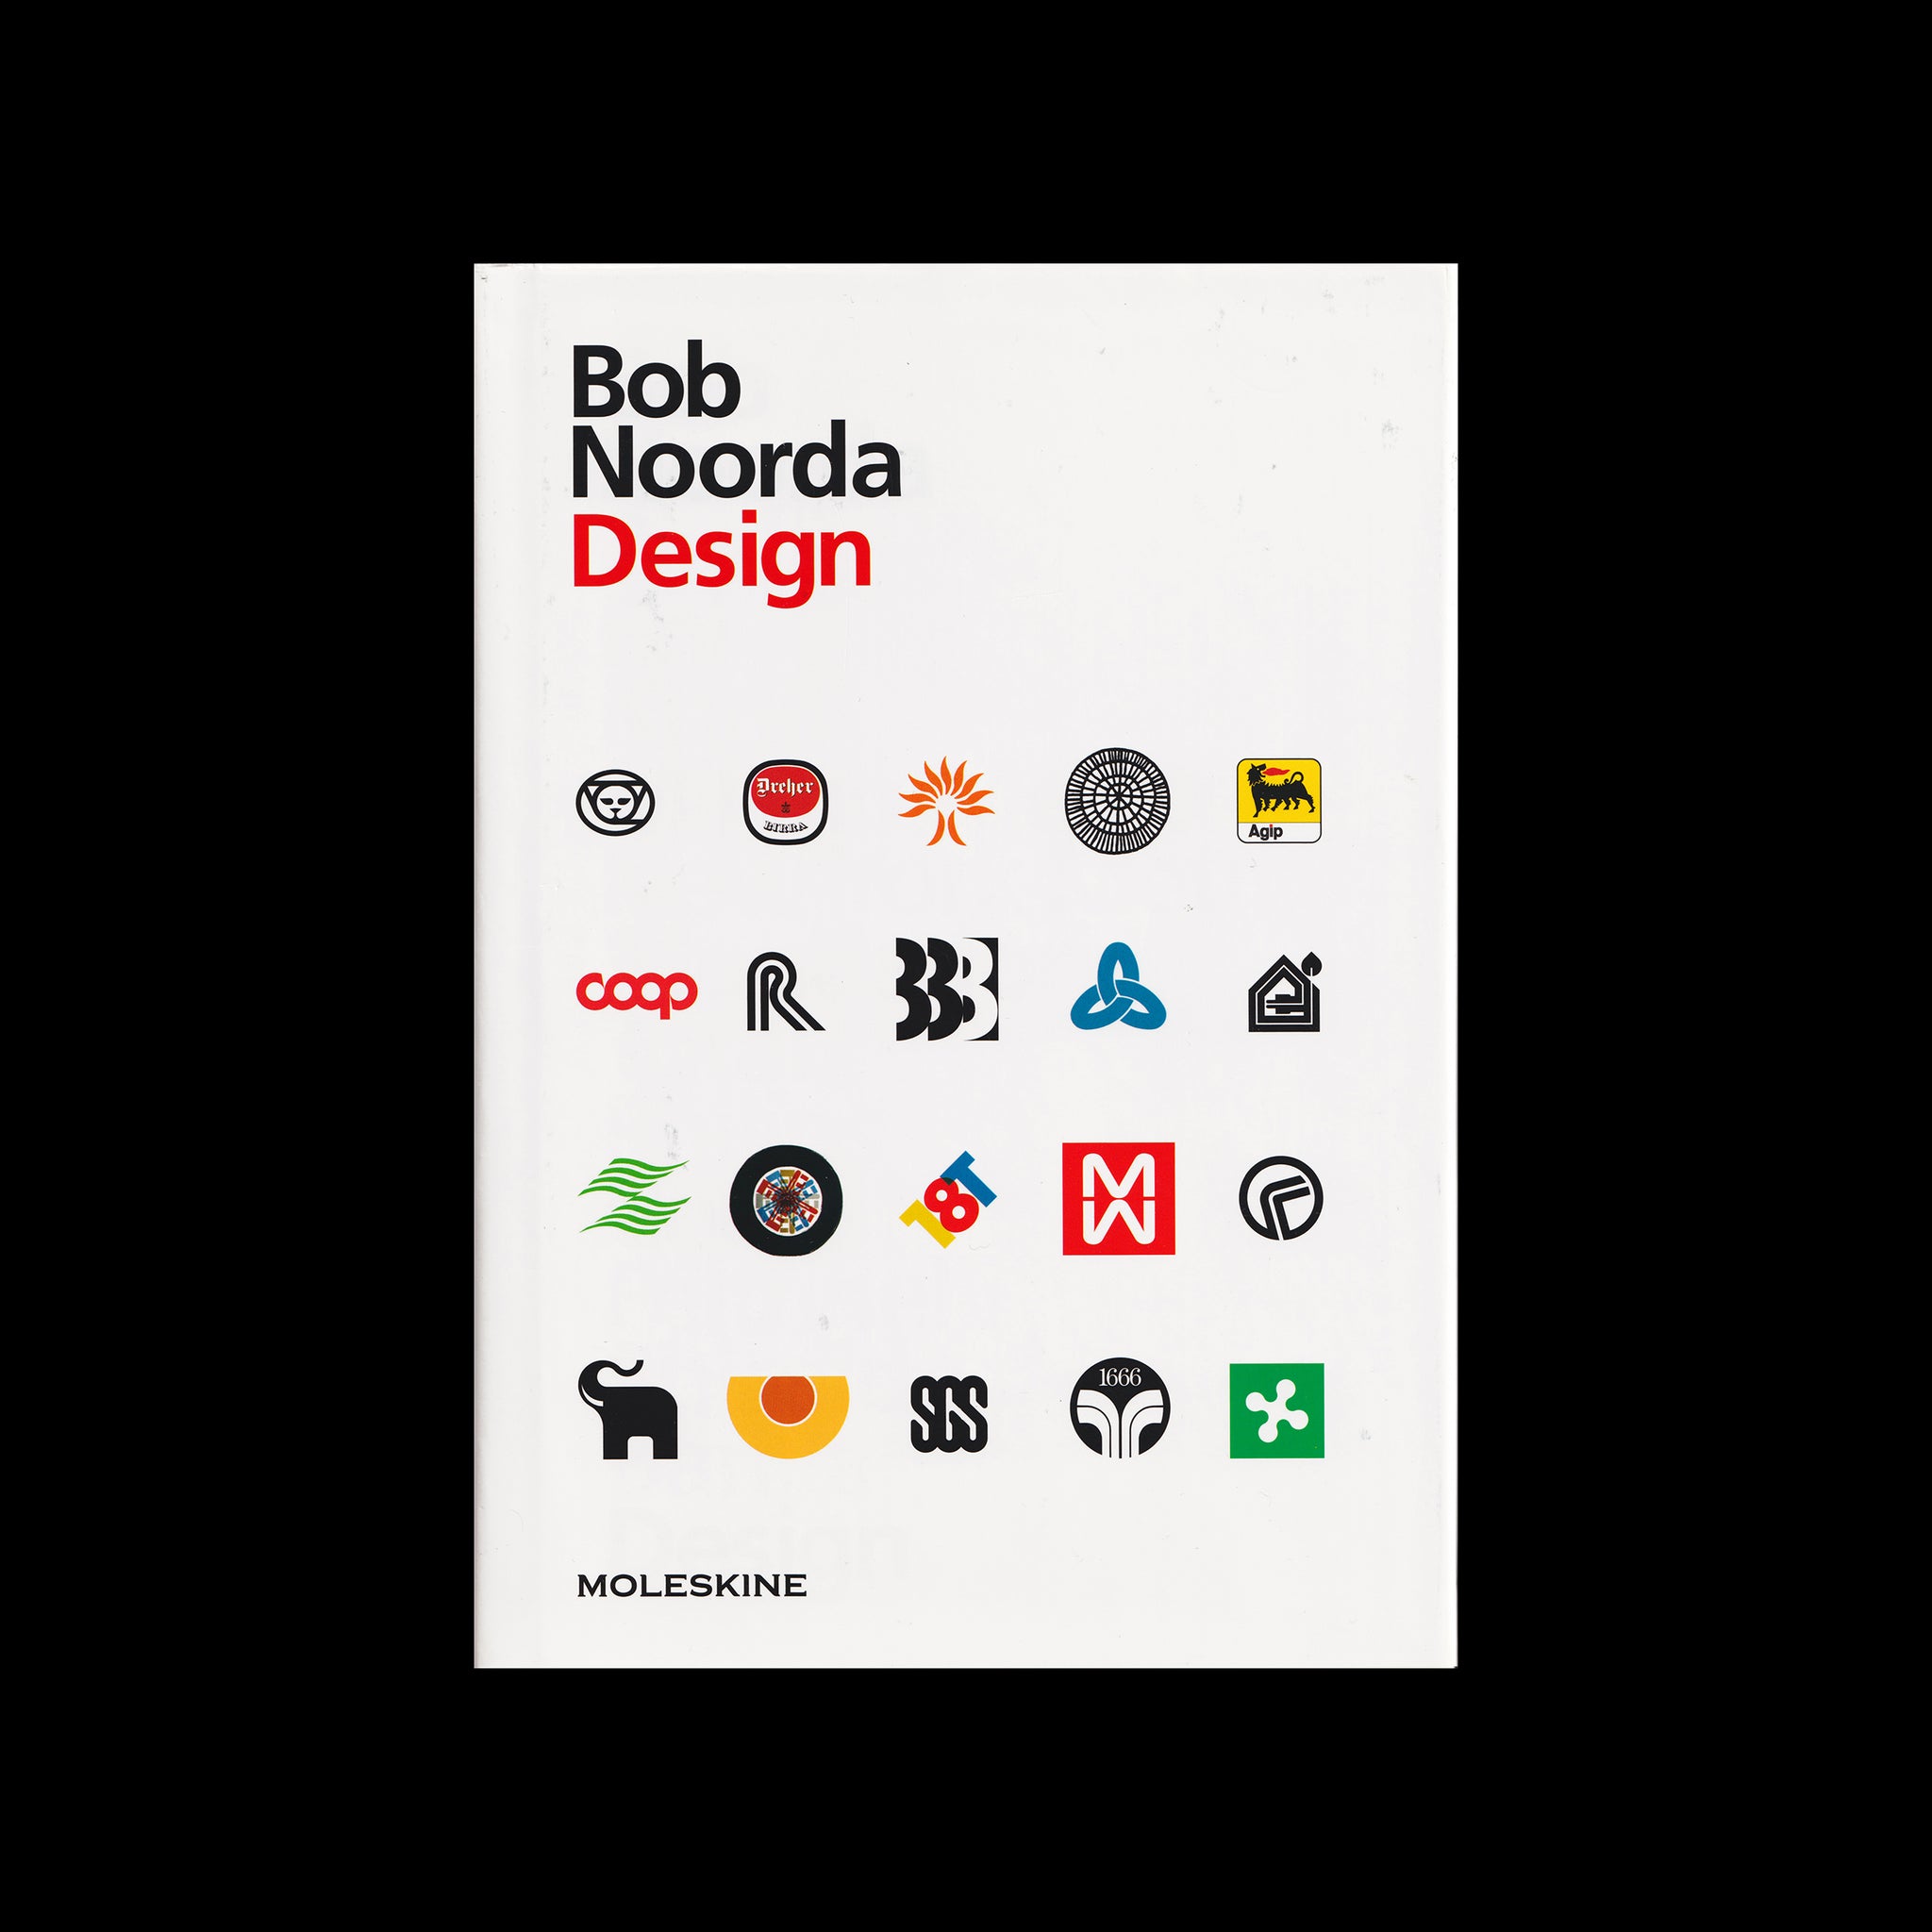 Bob Noorda Design, 2015